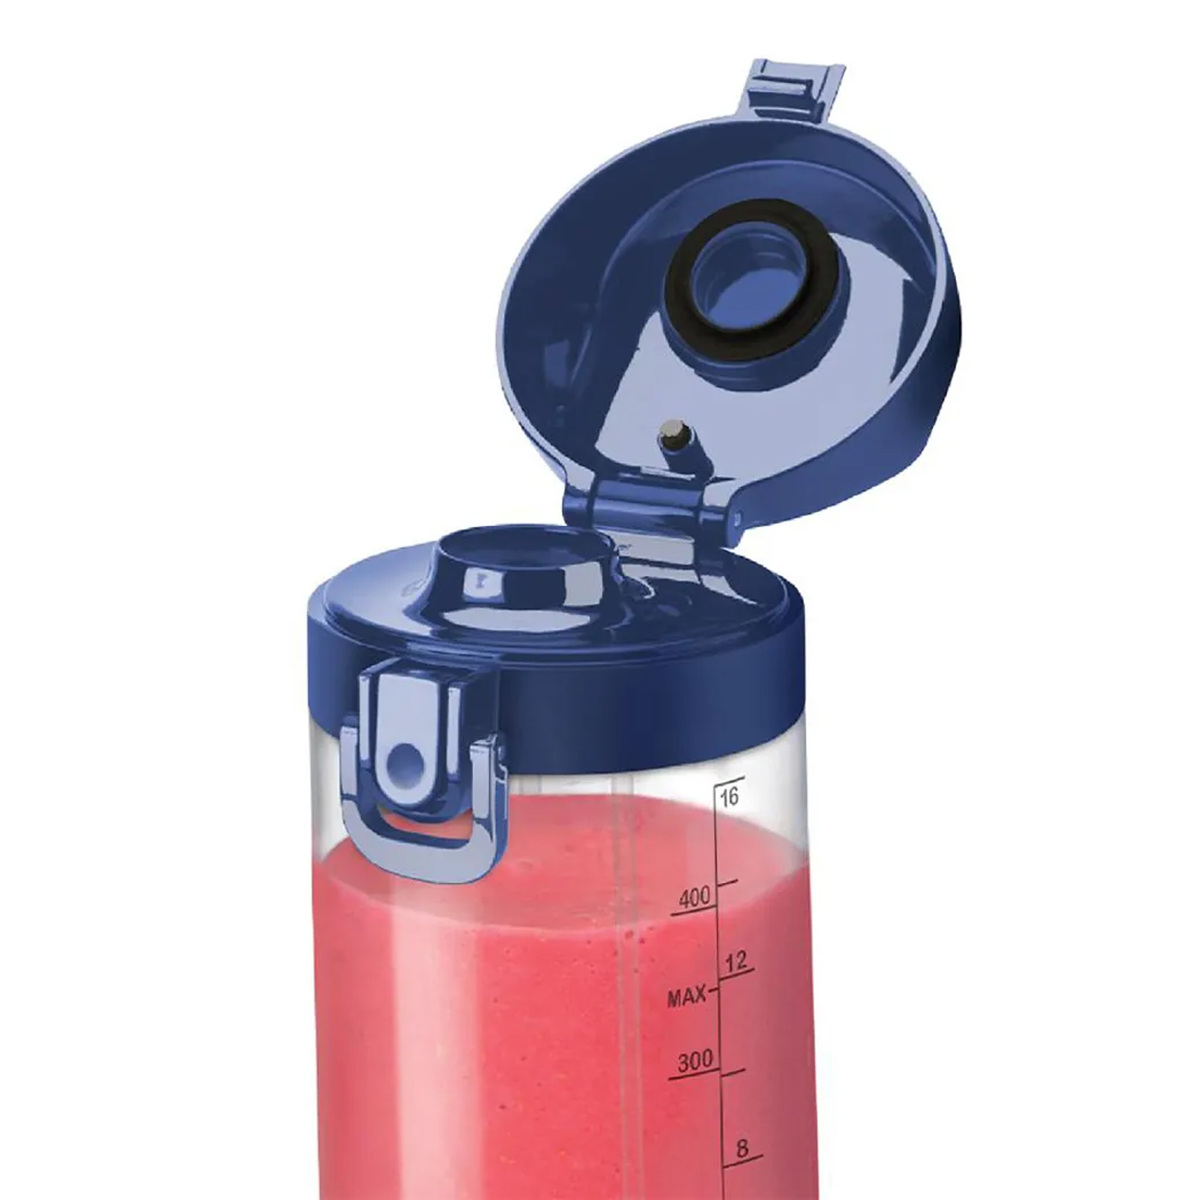 Nutribullet Rechargeable Portable Blender, Navy Blue, NB-PB475B